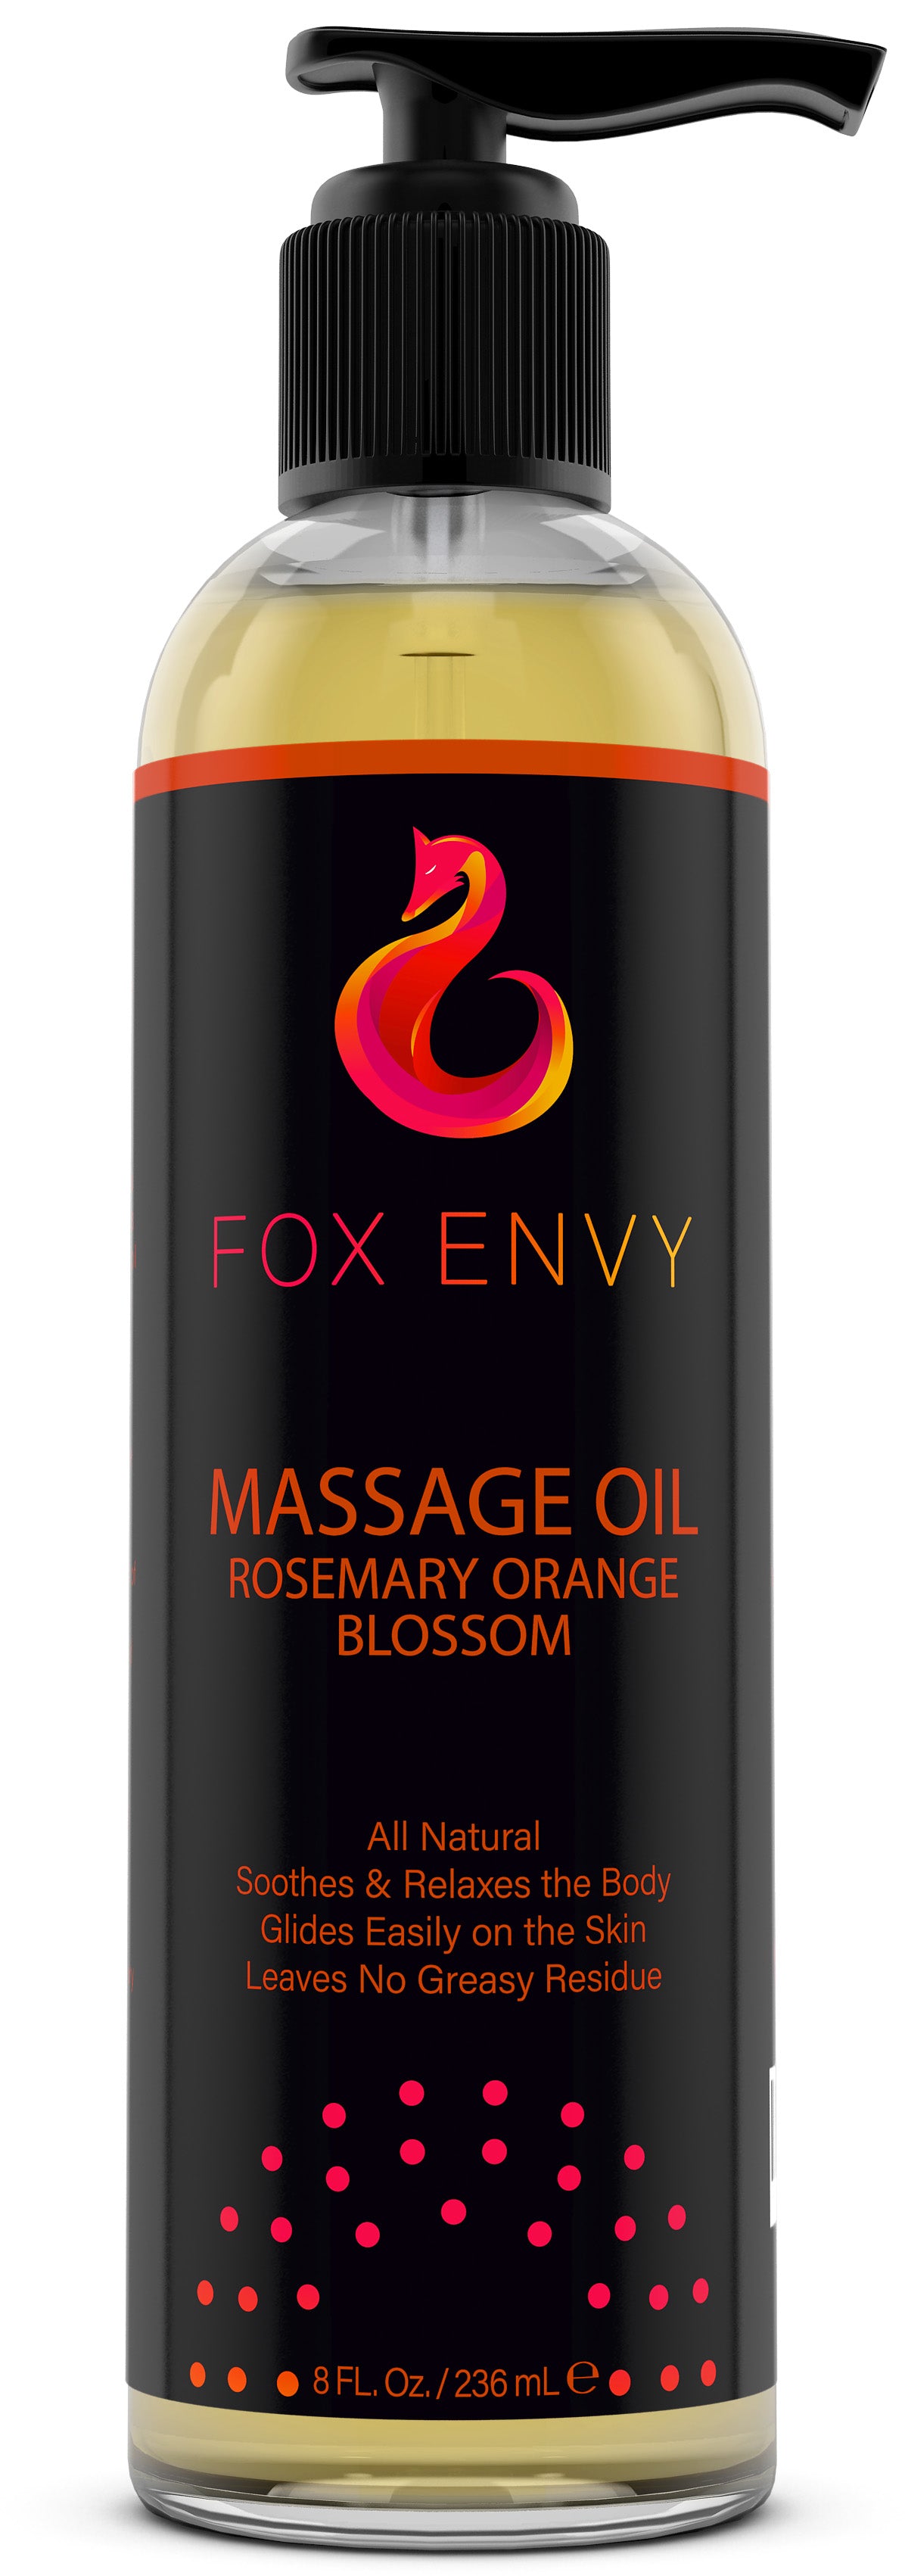 Massage Oil - Rosemary Orange Blossom